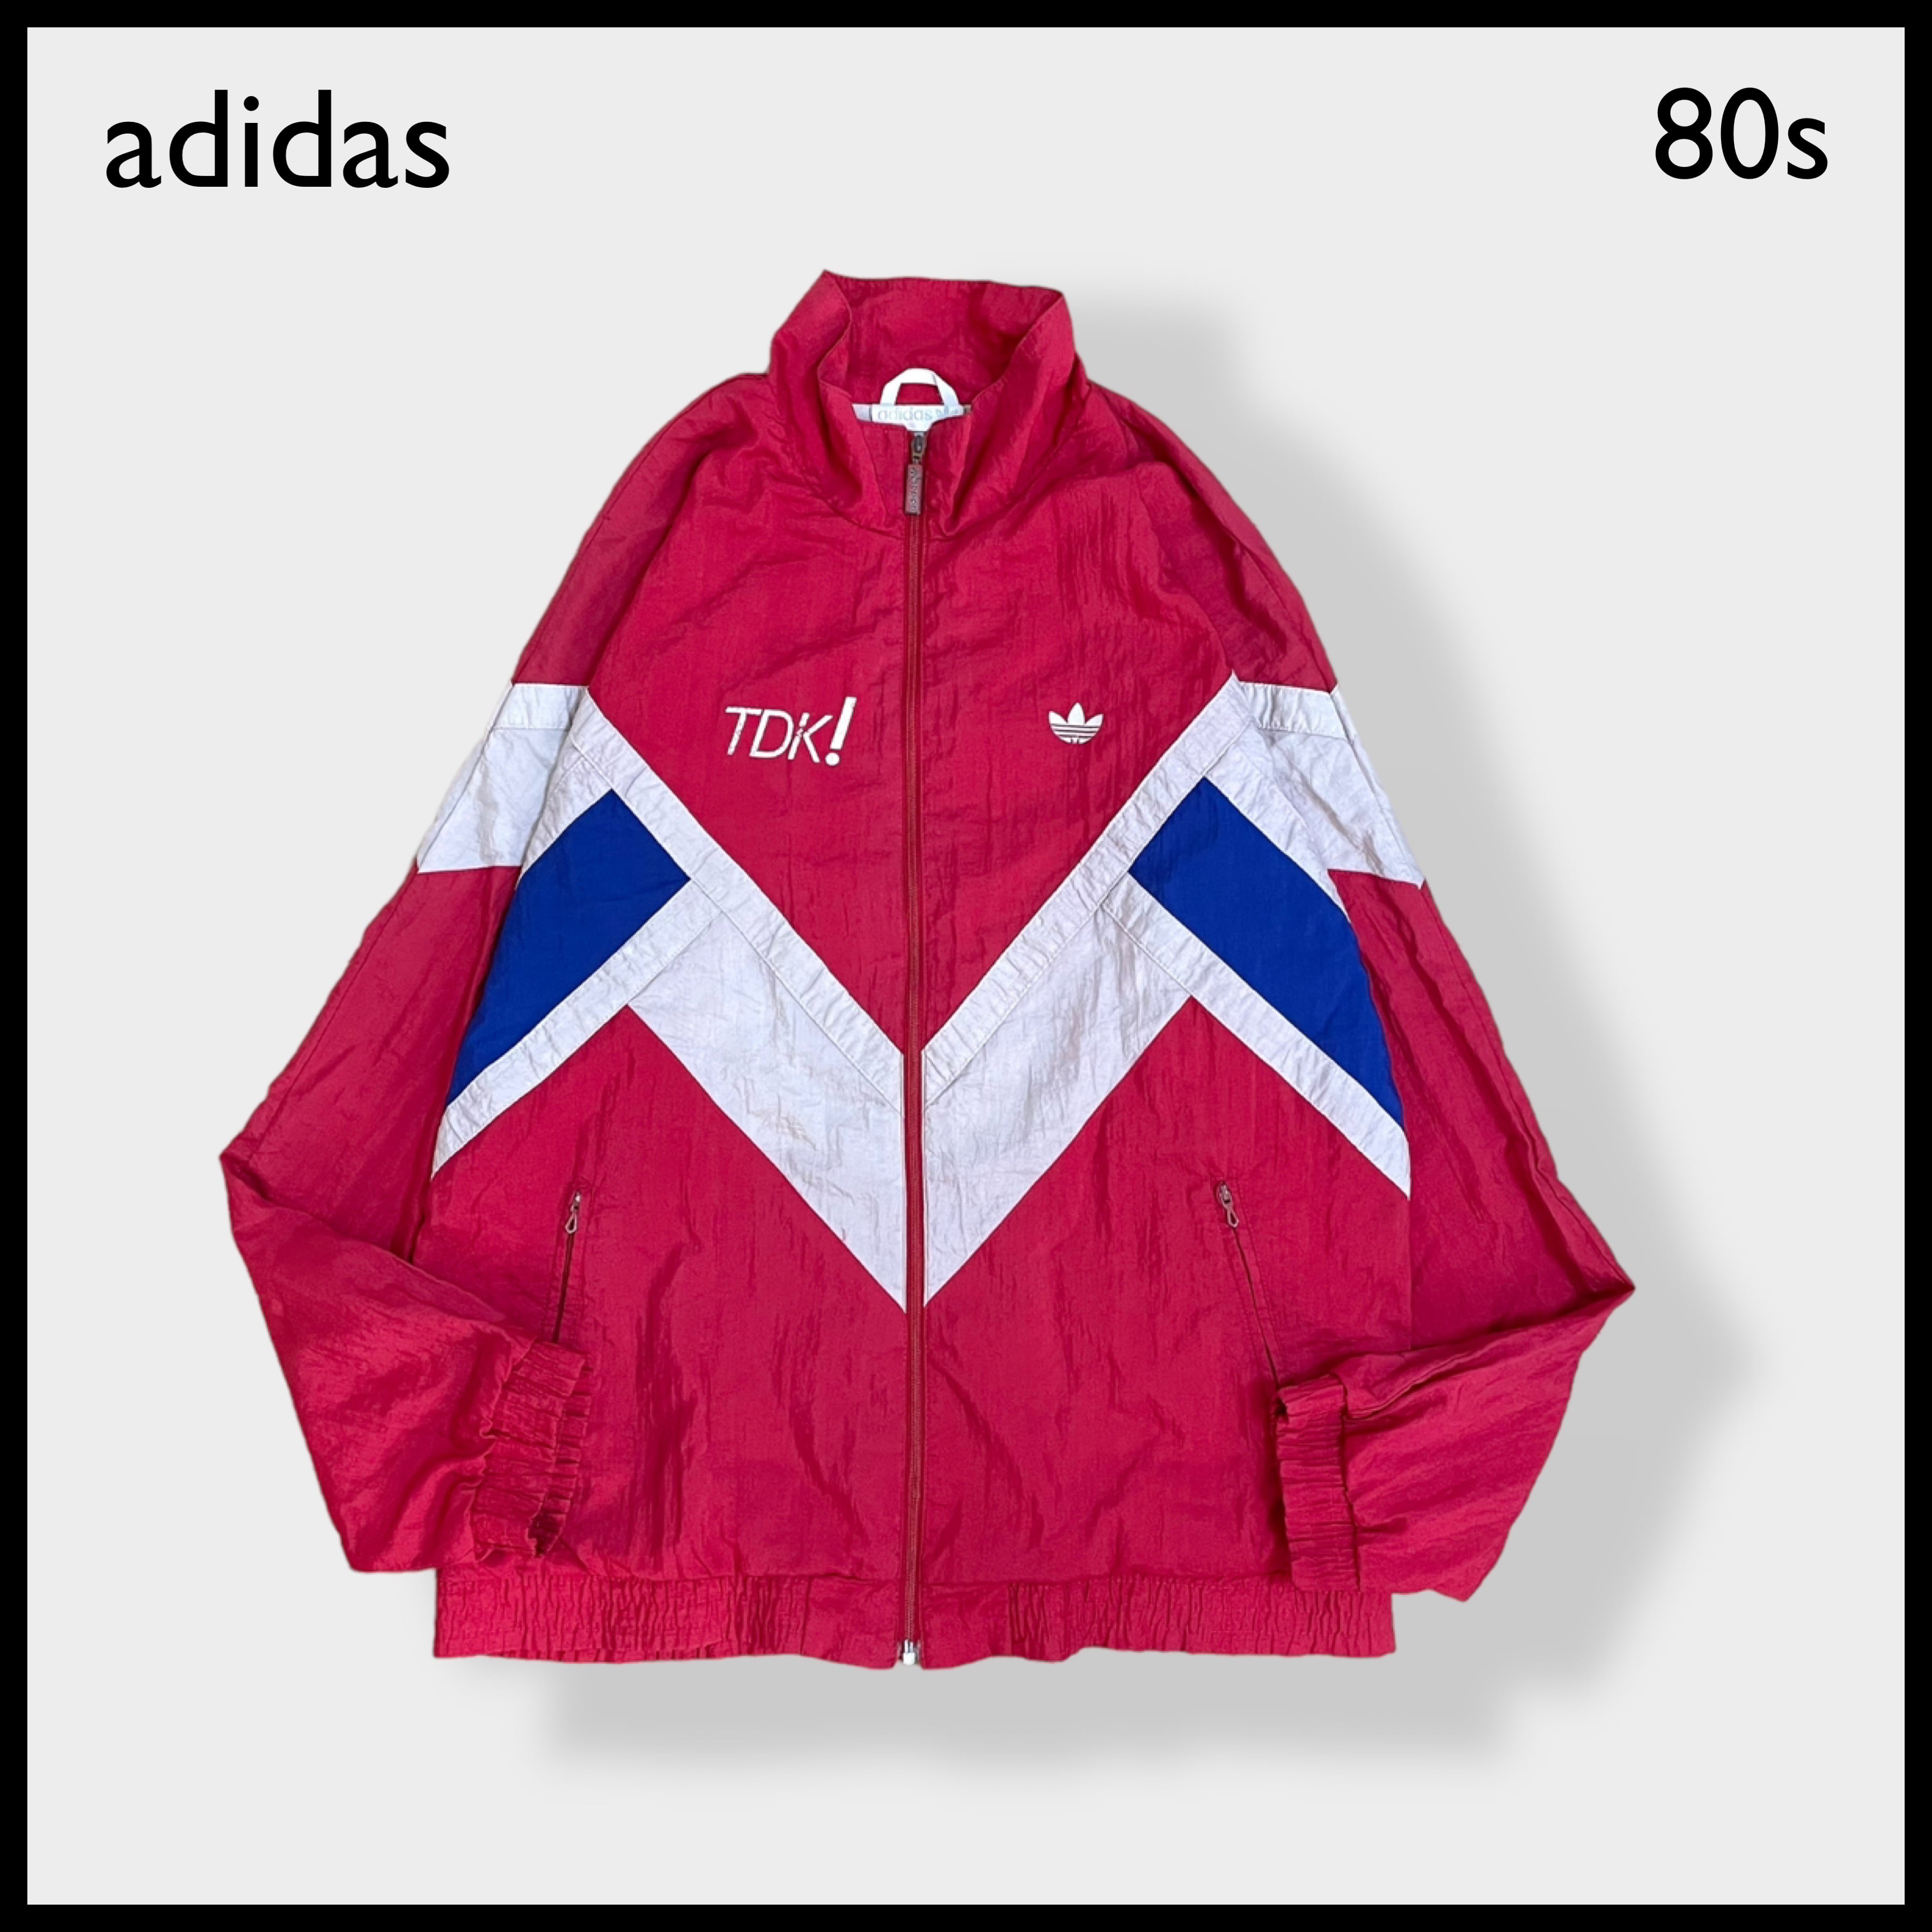 adidas】80s 世界陸上 1991 東京大会 企業系 企業ロゴ